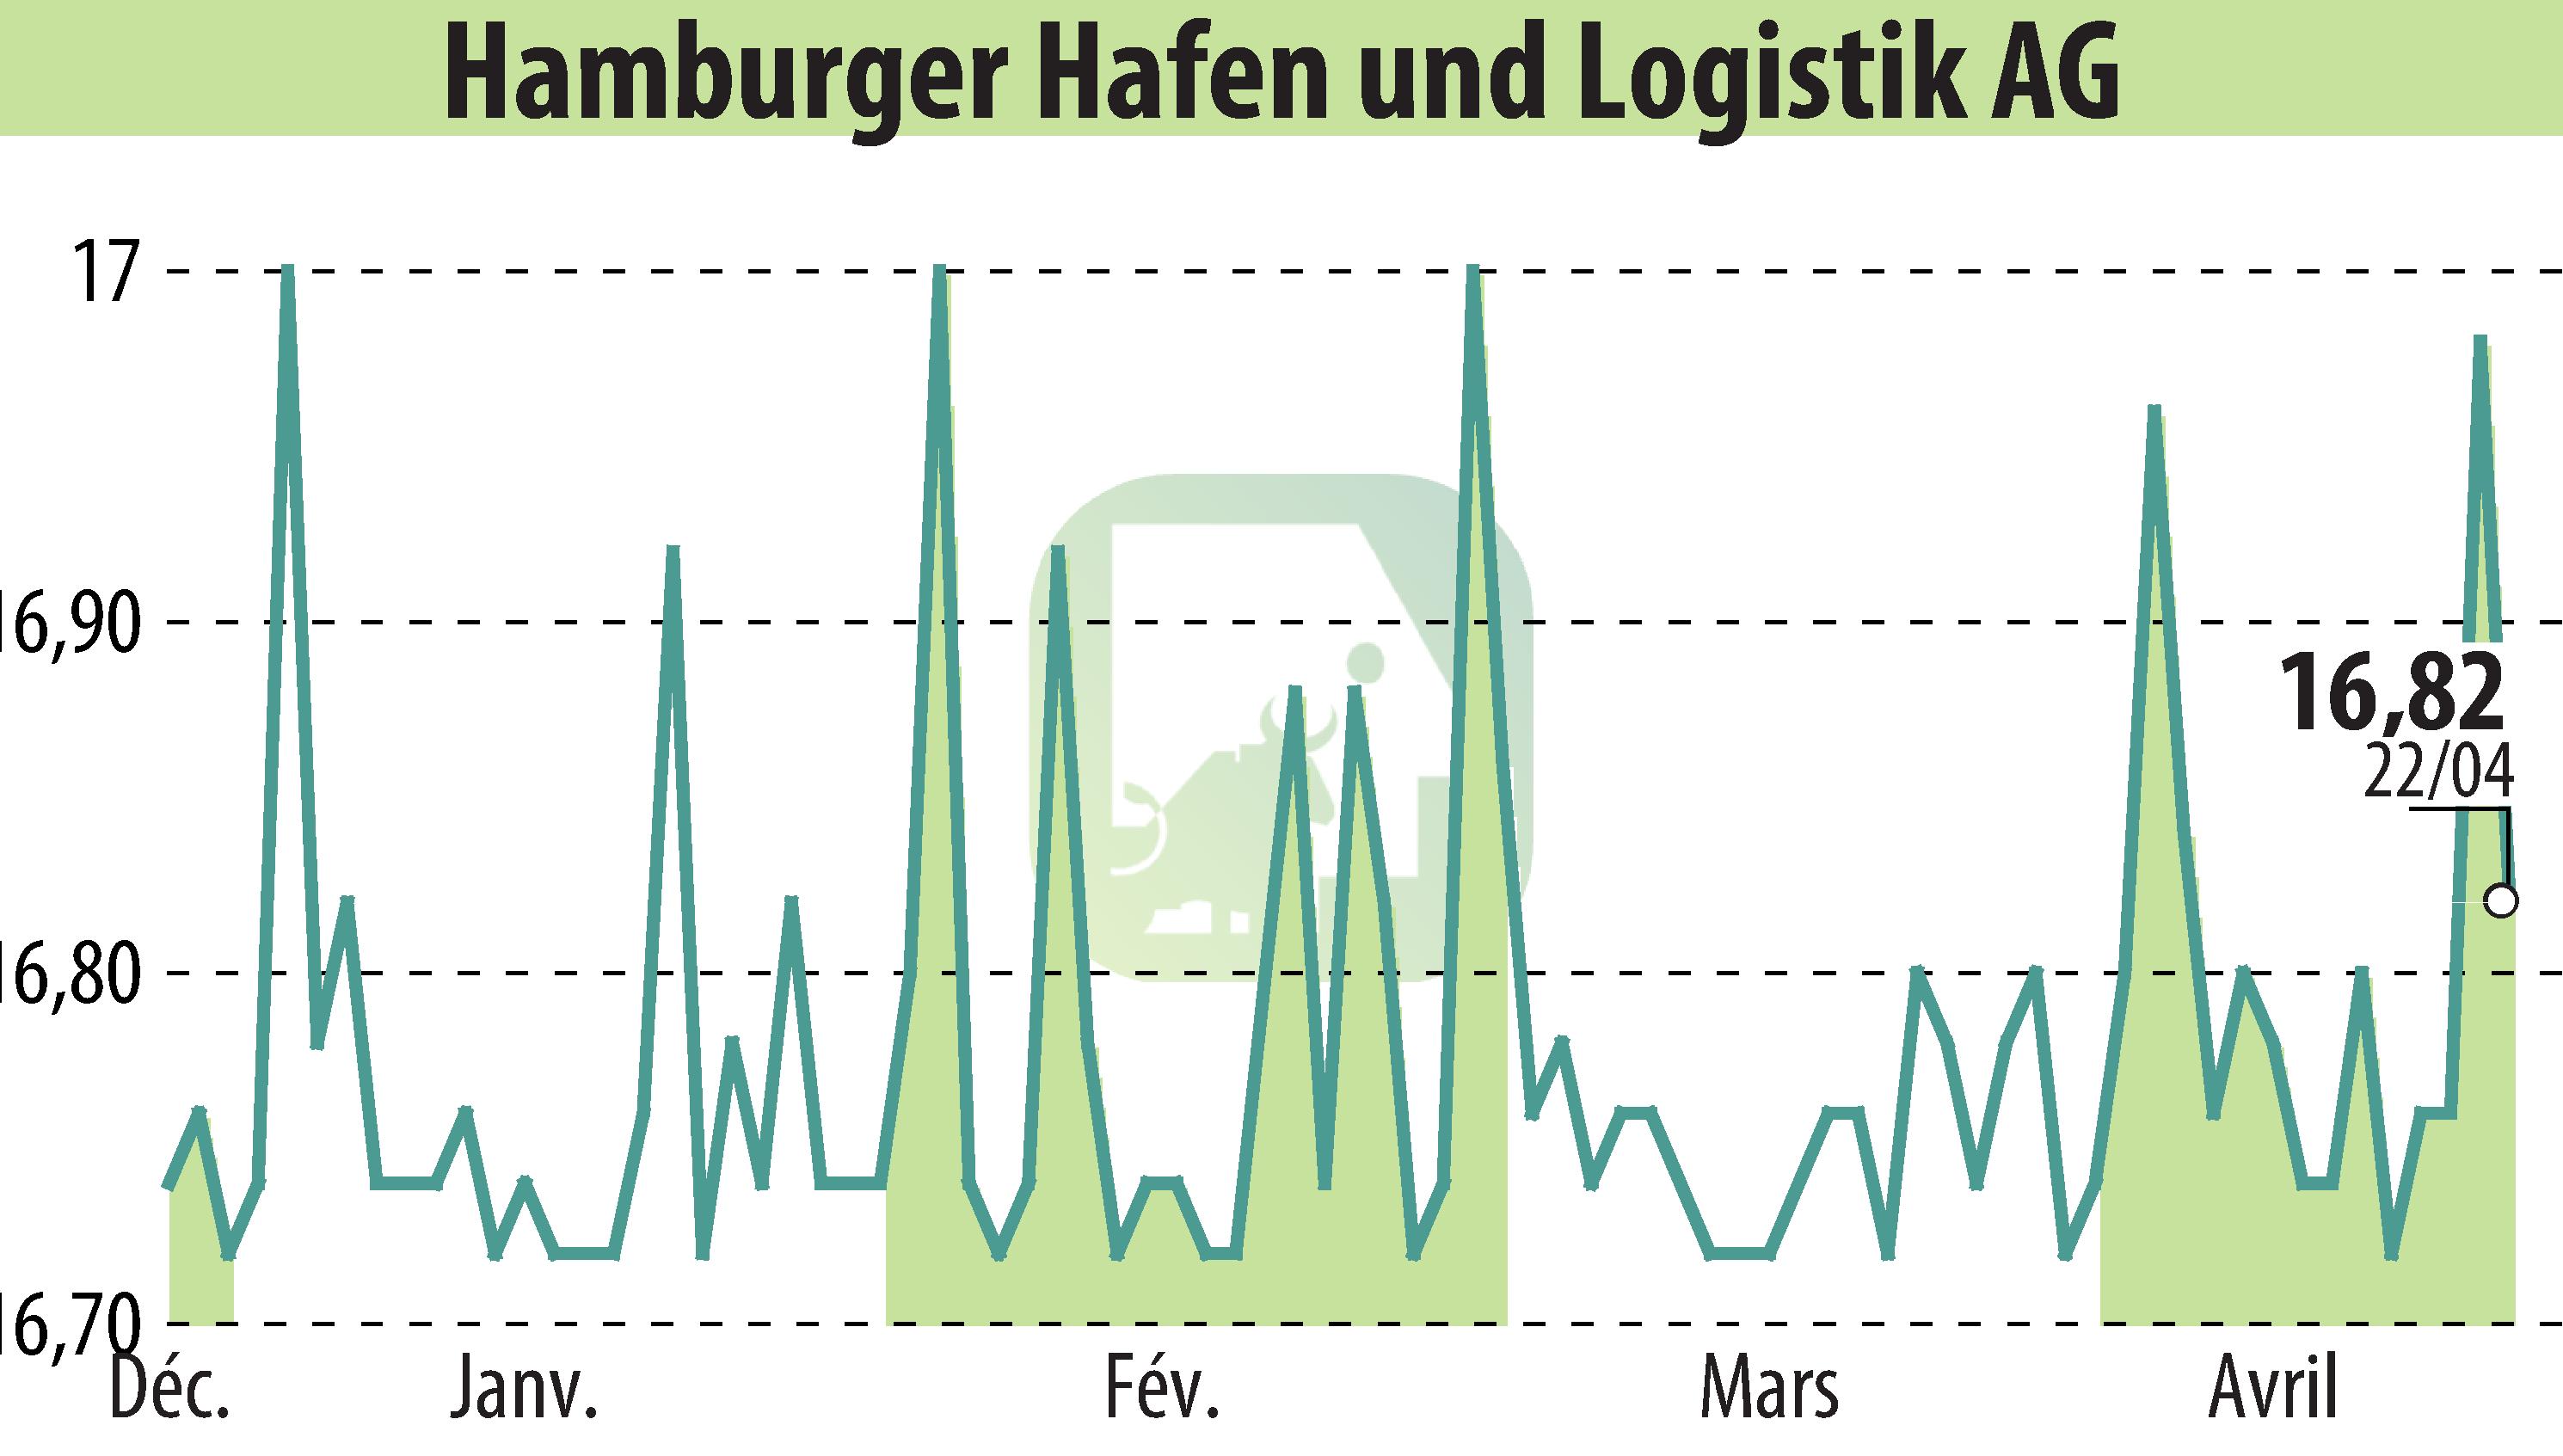 Stock price chart of Hamburger Hafen Und Logistik AG (EBR:HHFA) showing fluctuations.